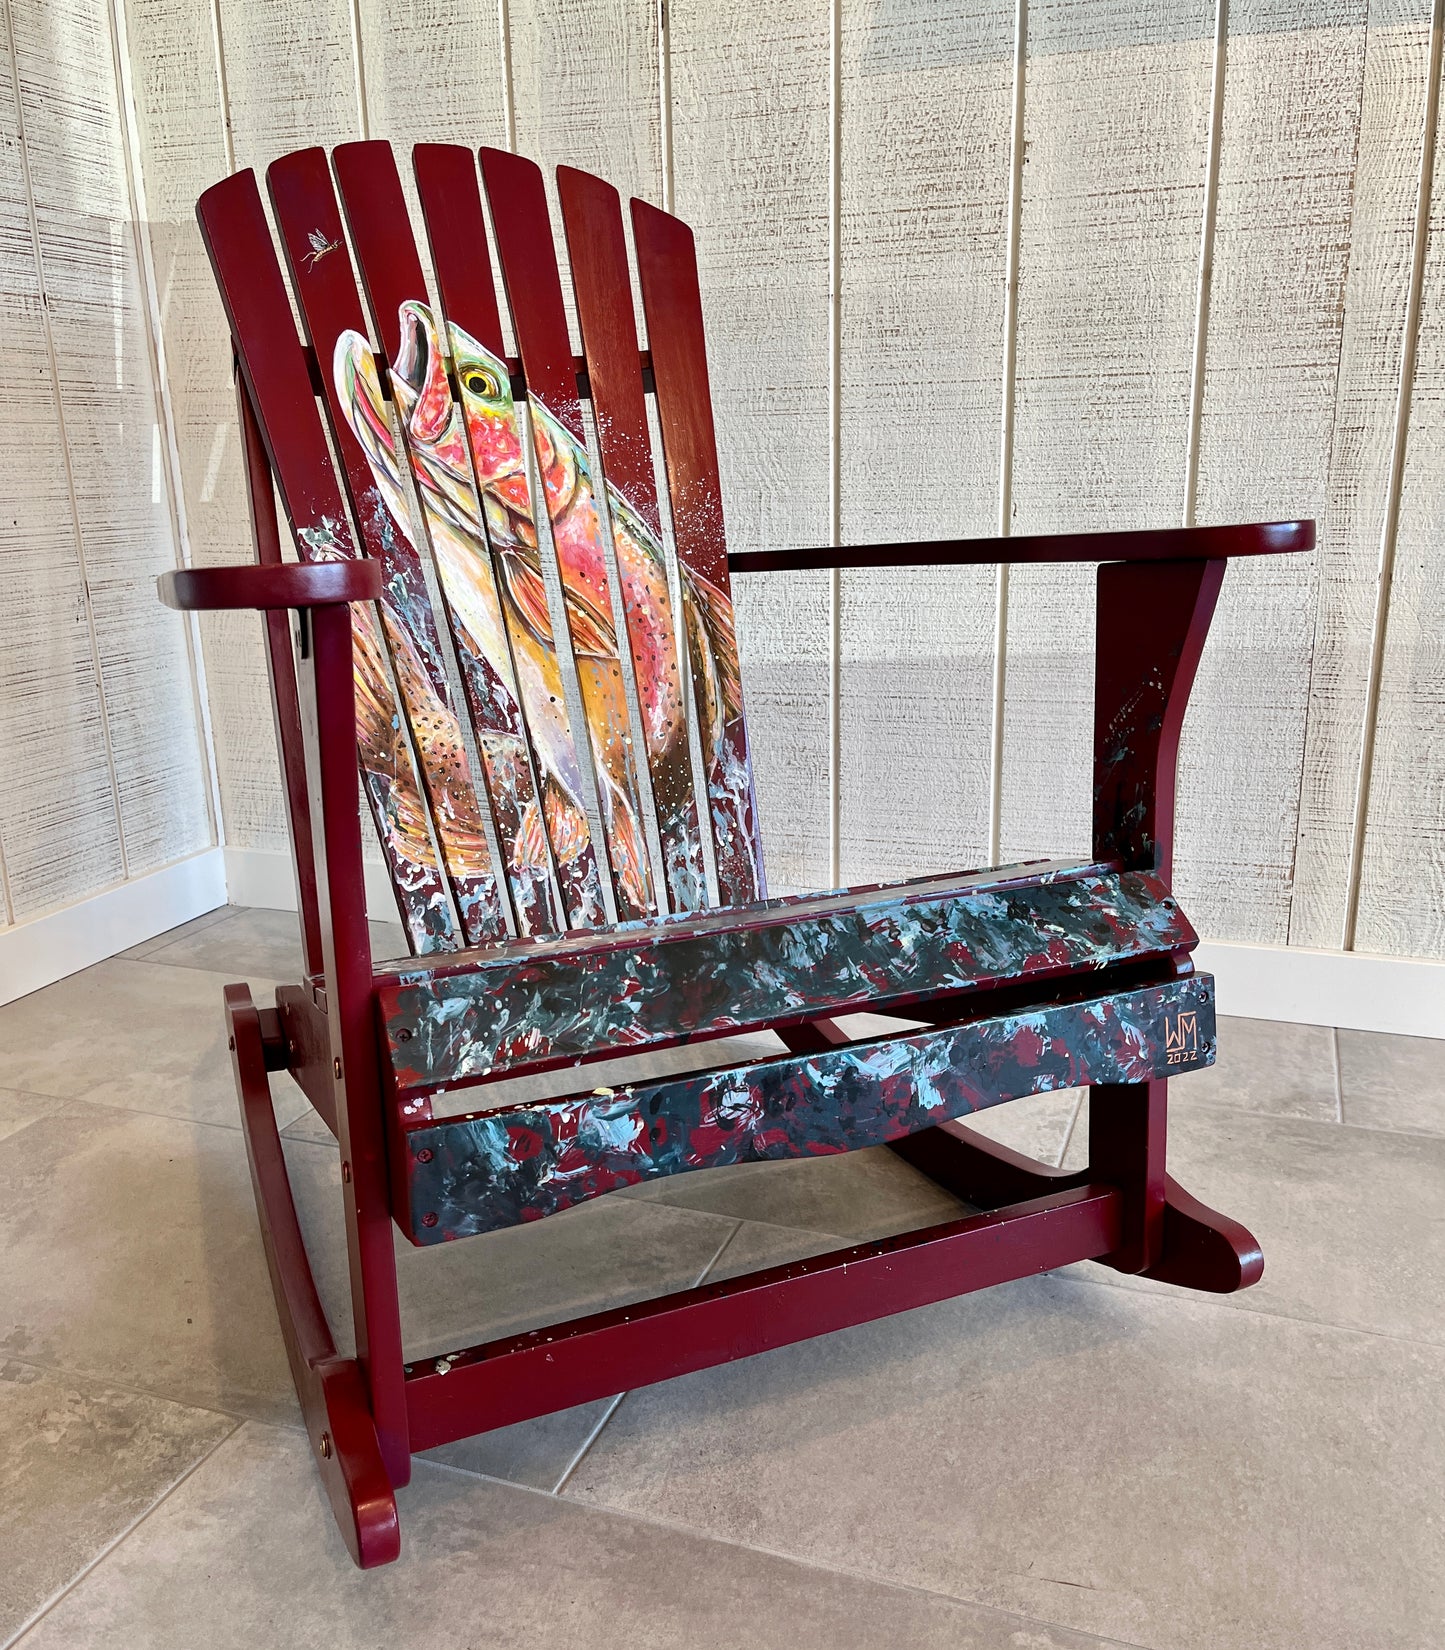 Will Munford: Yellowstone Cutthroat Chair #1